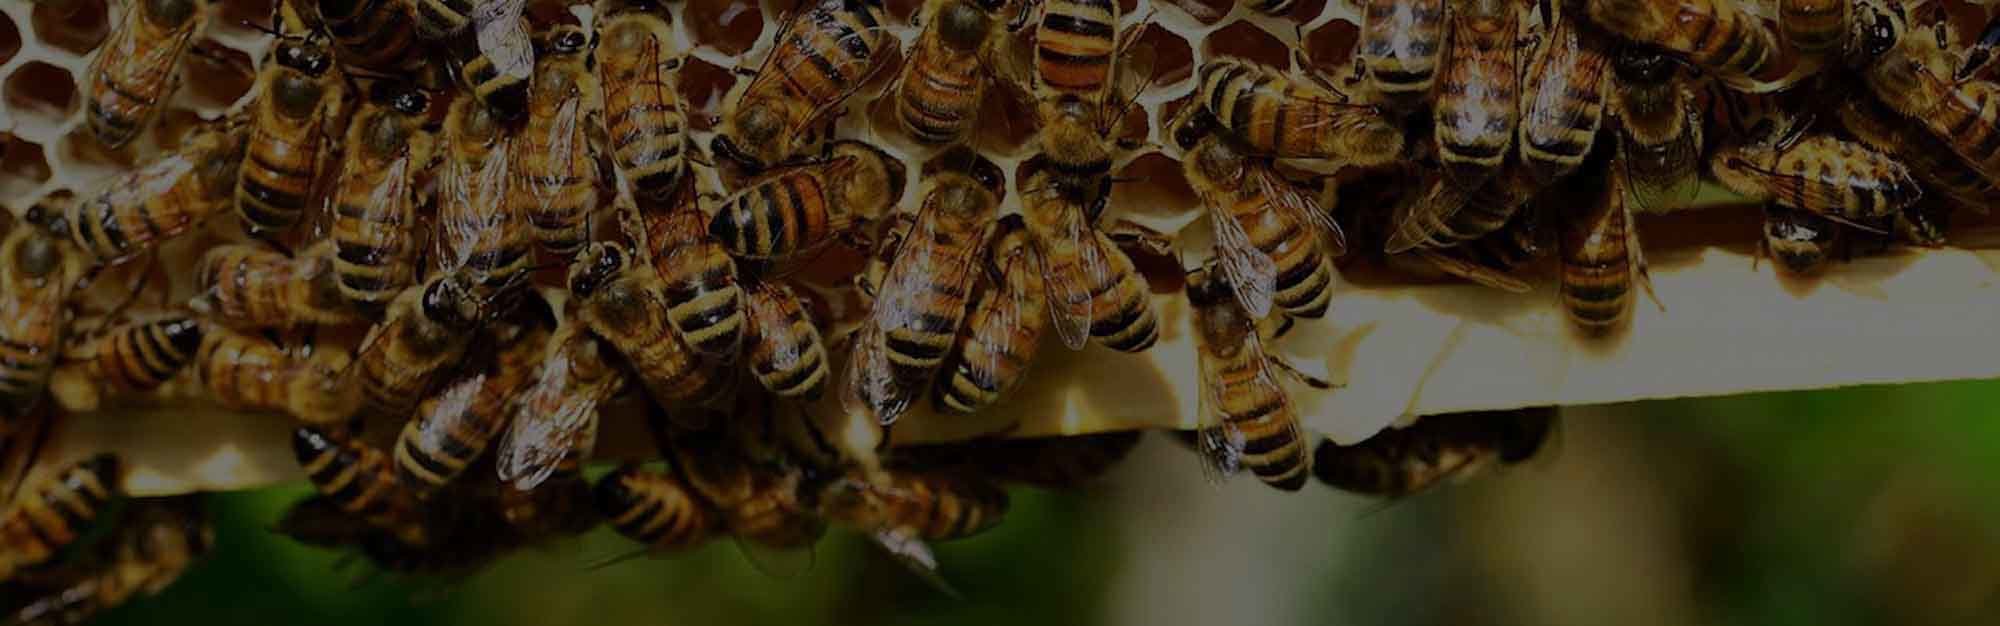 DELPA-Bee-Removal-Experts-in-Houston-Texas-v002-3